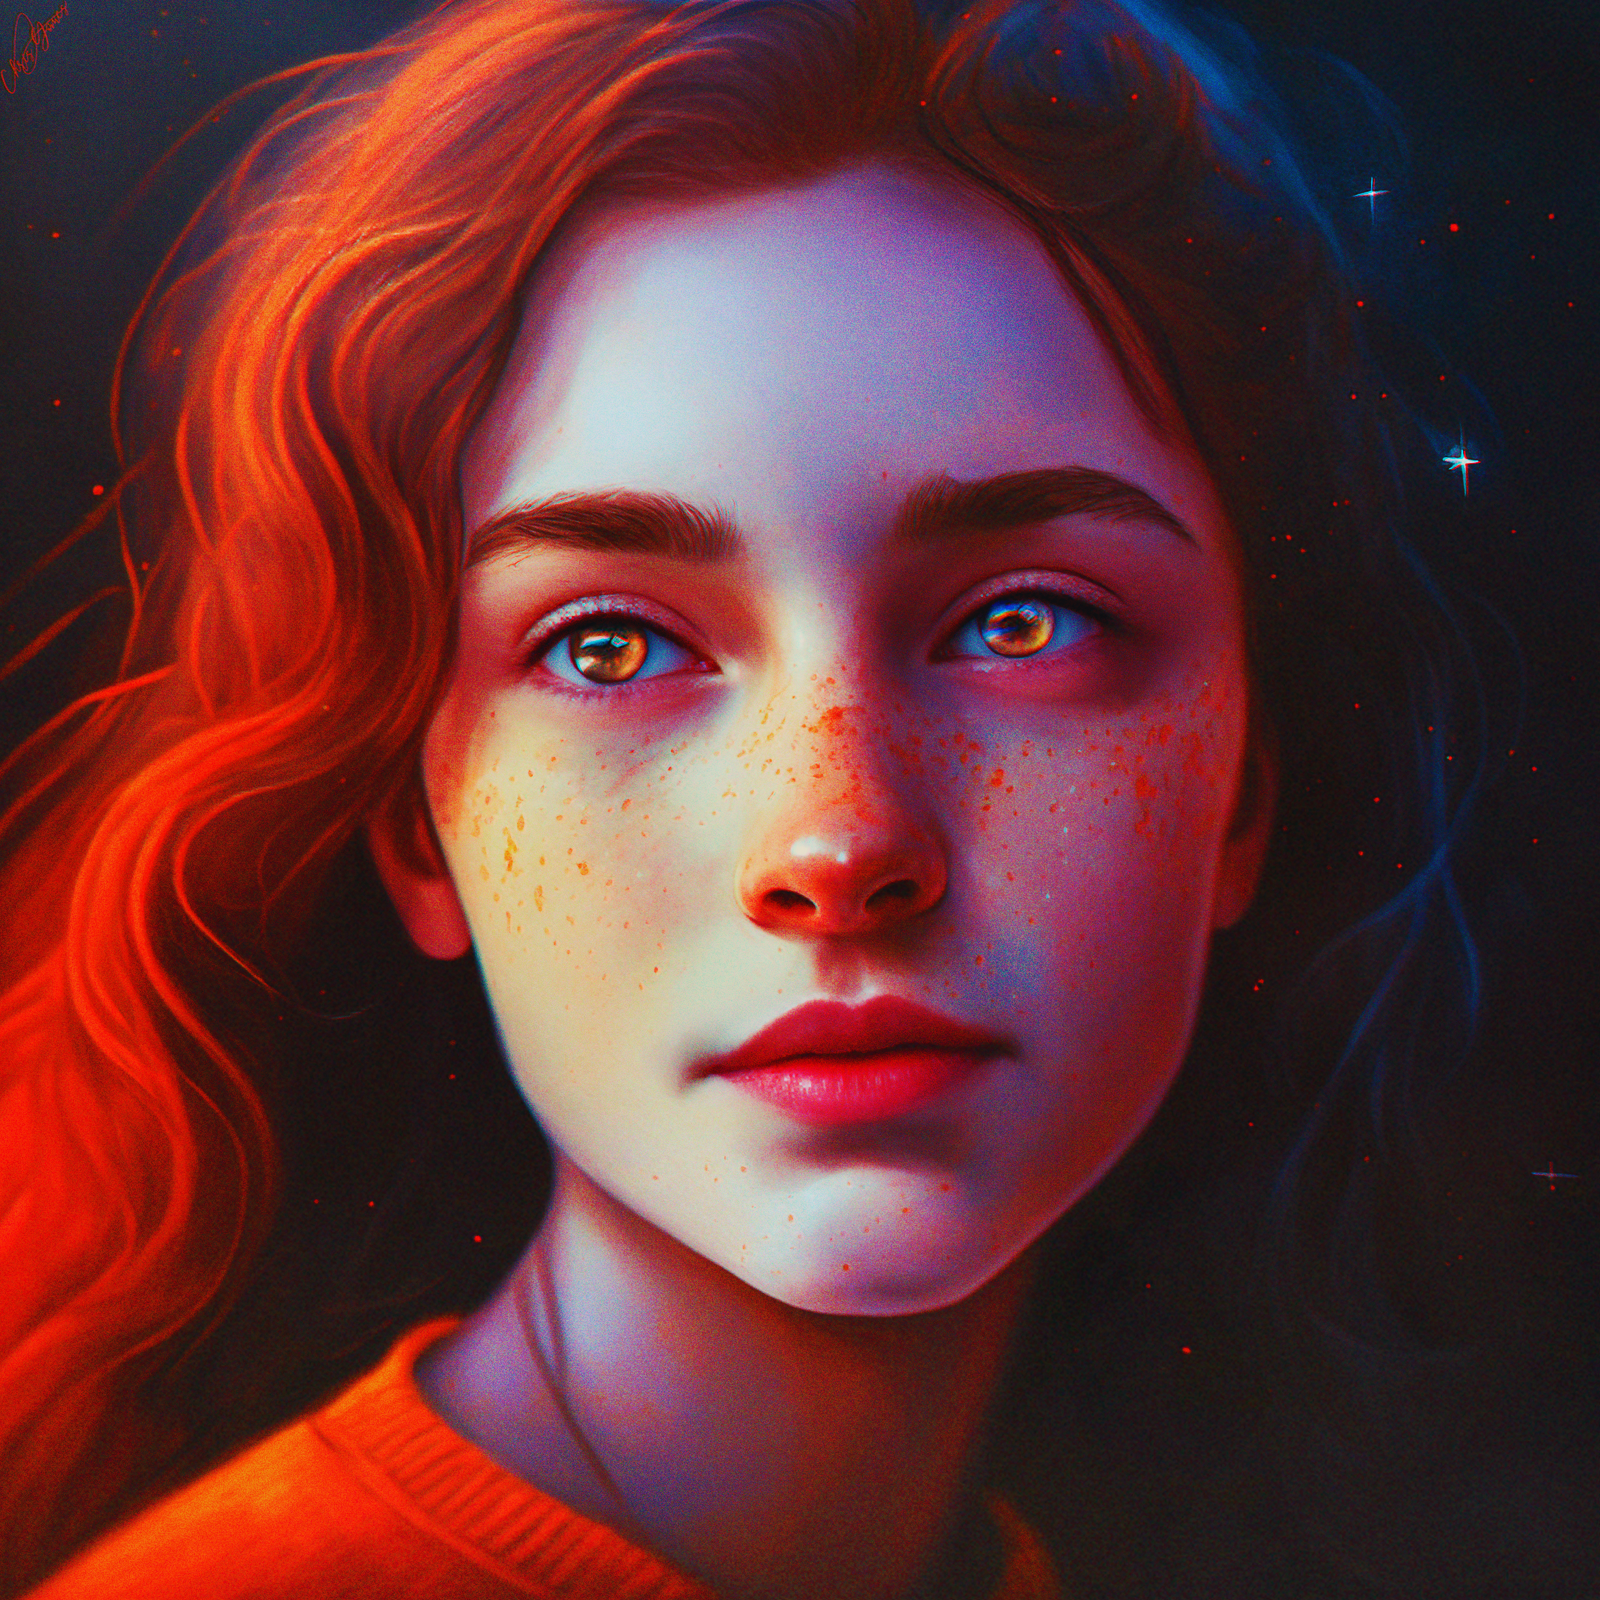 General 1600x1600 women warm colors illustration drawing portrait freckles redhead closeup digital art